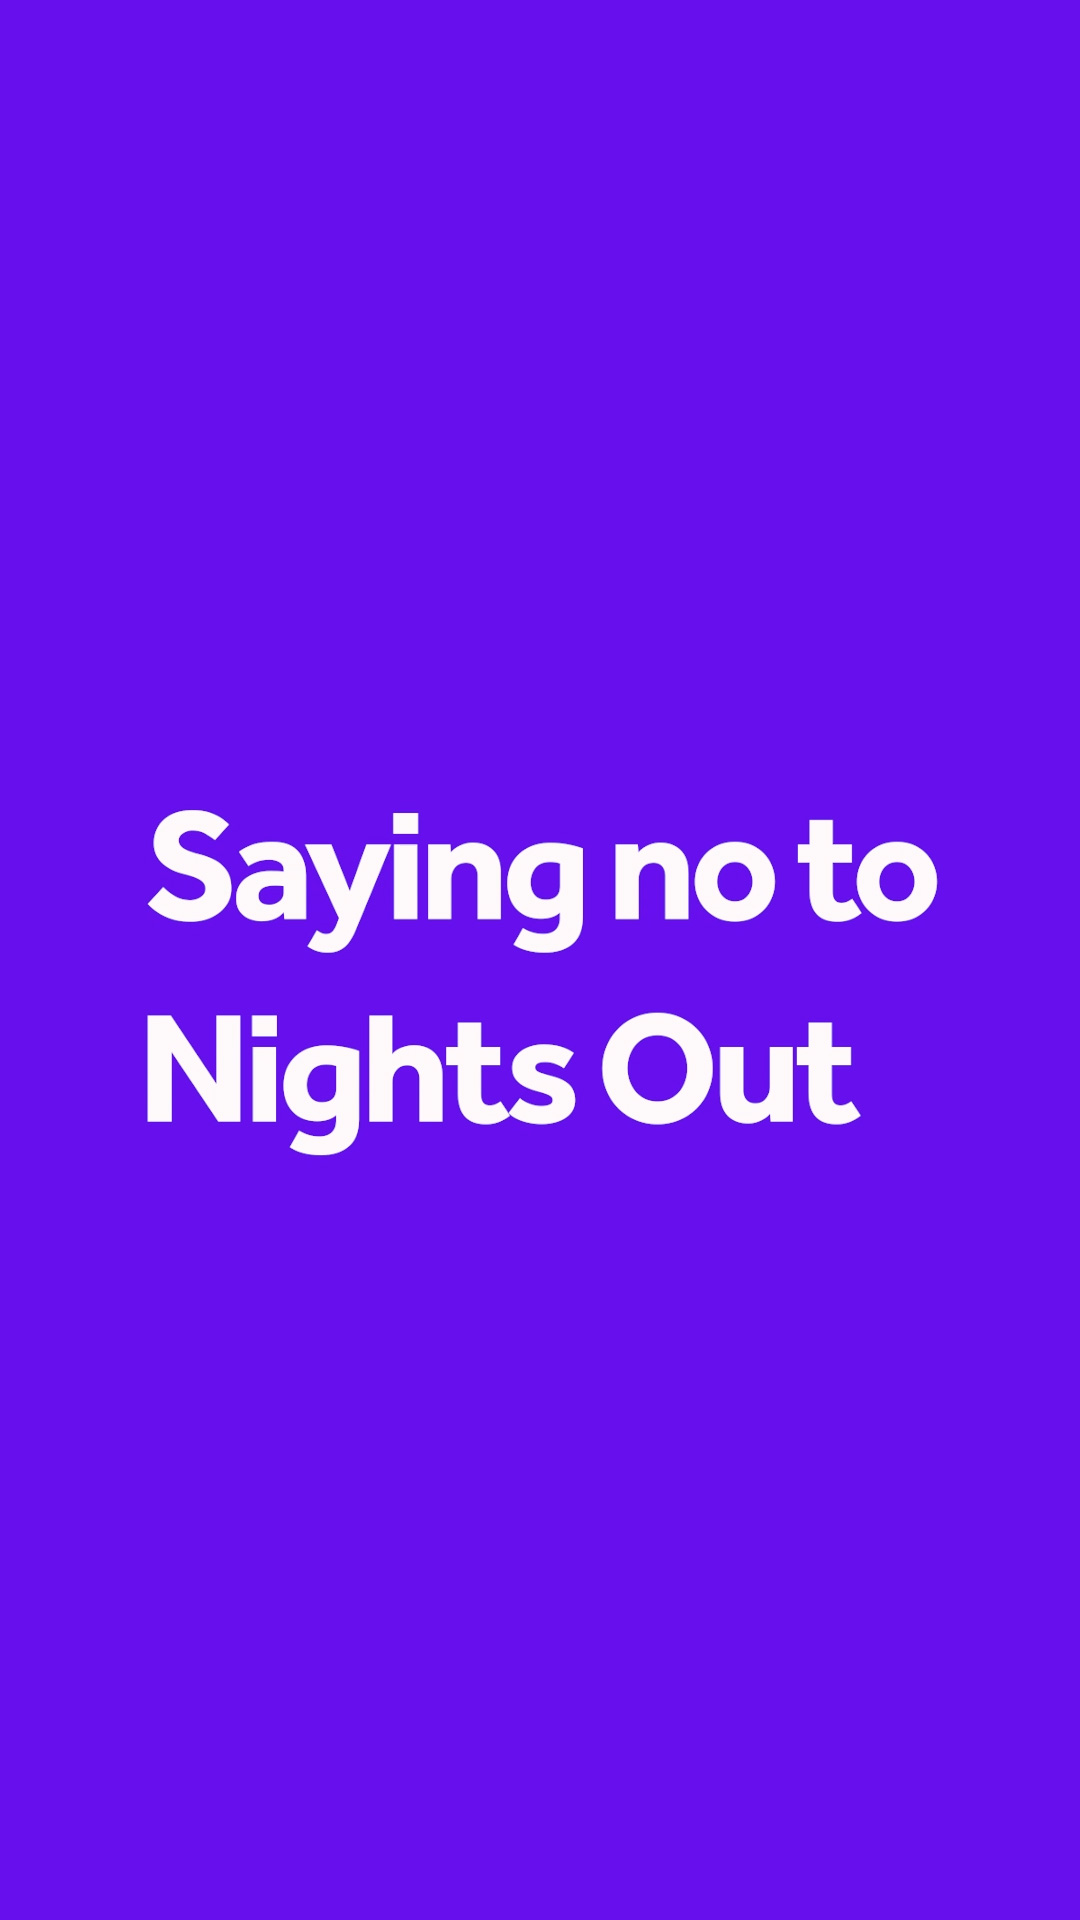 Barclays | Susku & Kereim | Saying No to Nights Out | 9x16 | 15